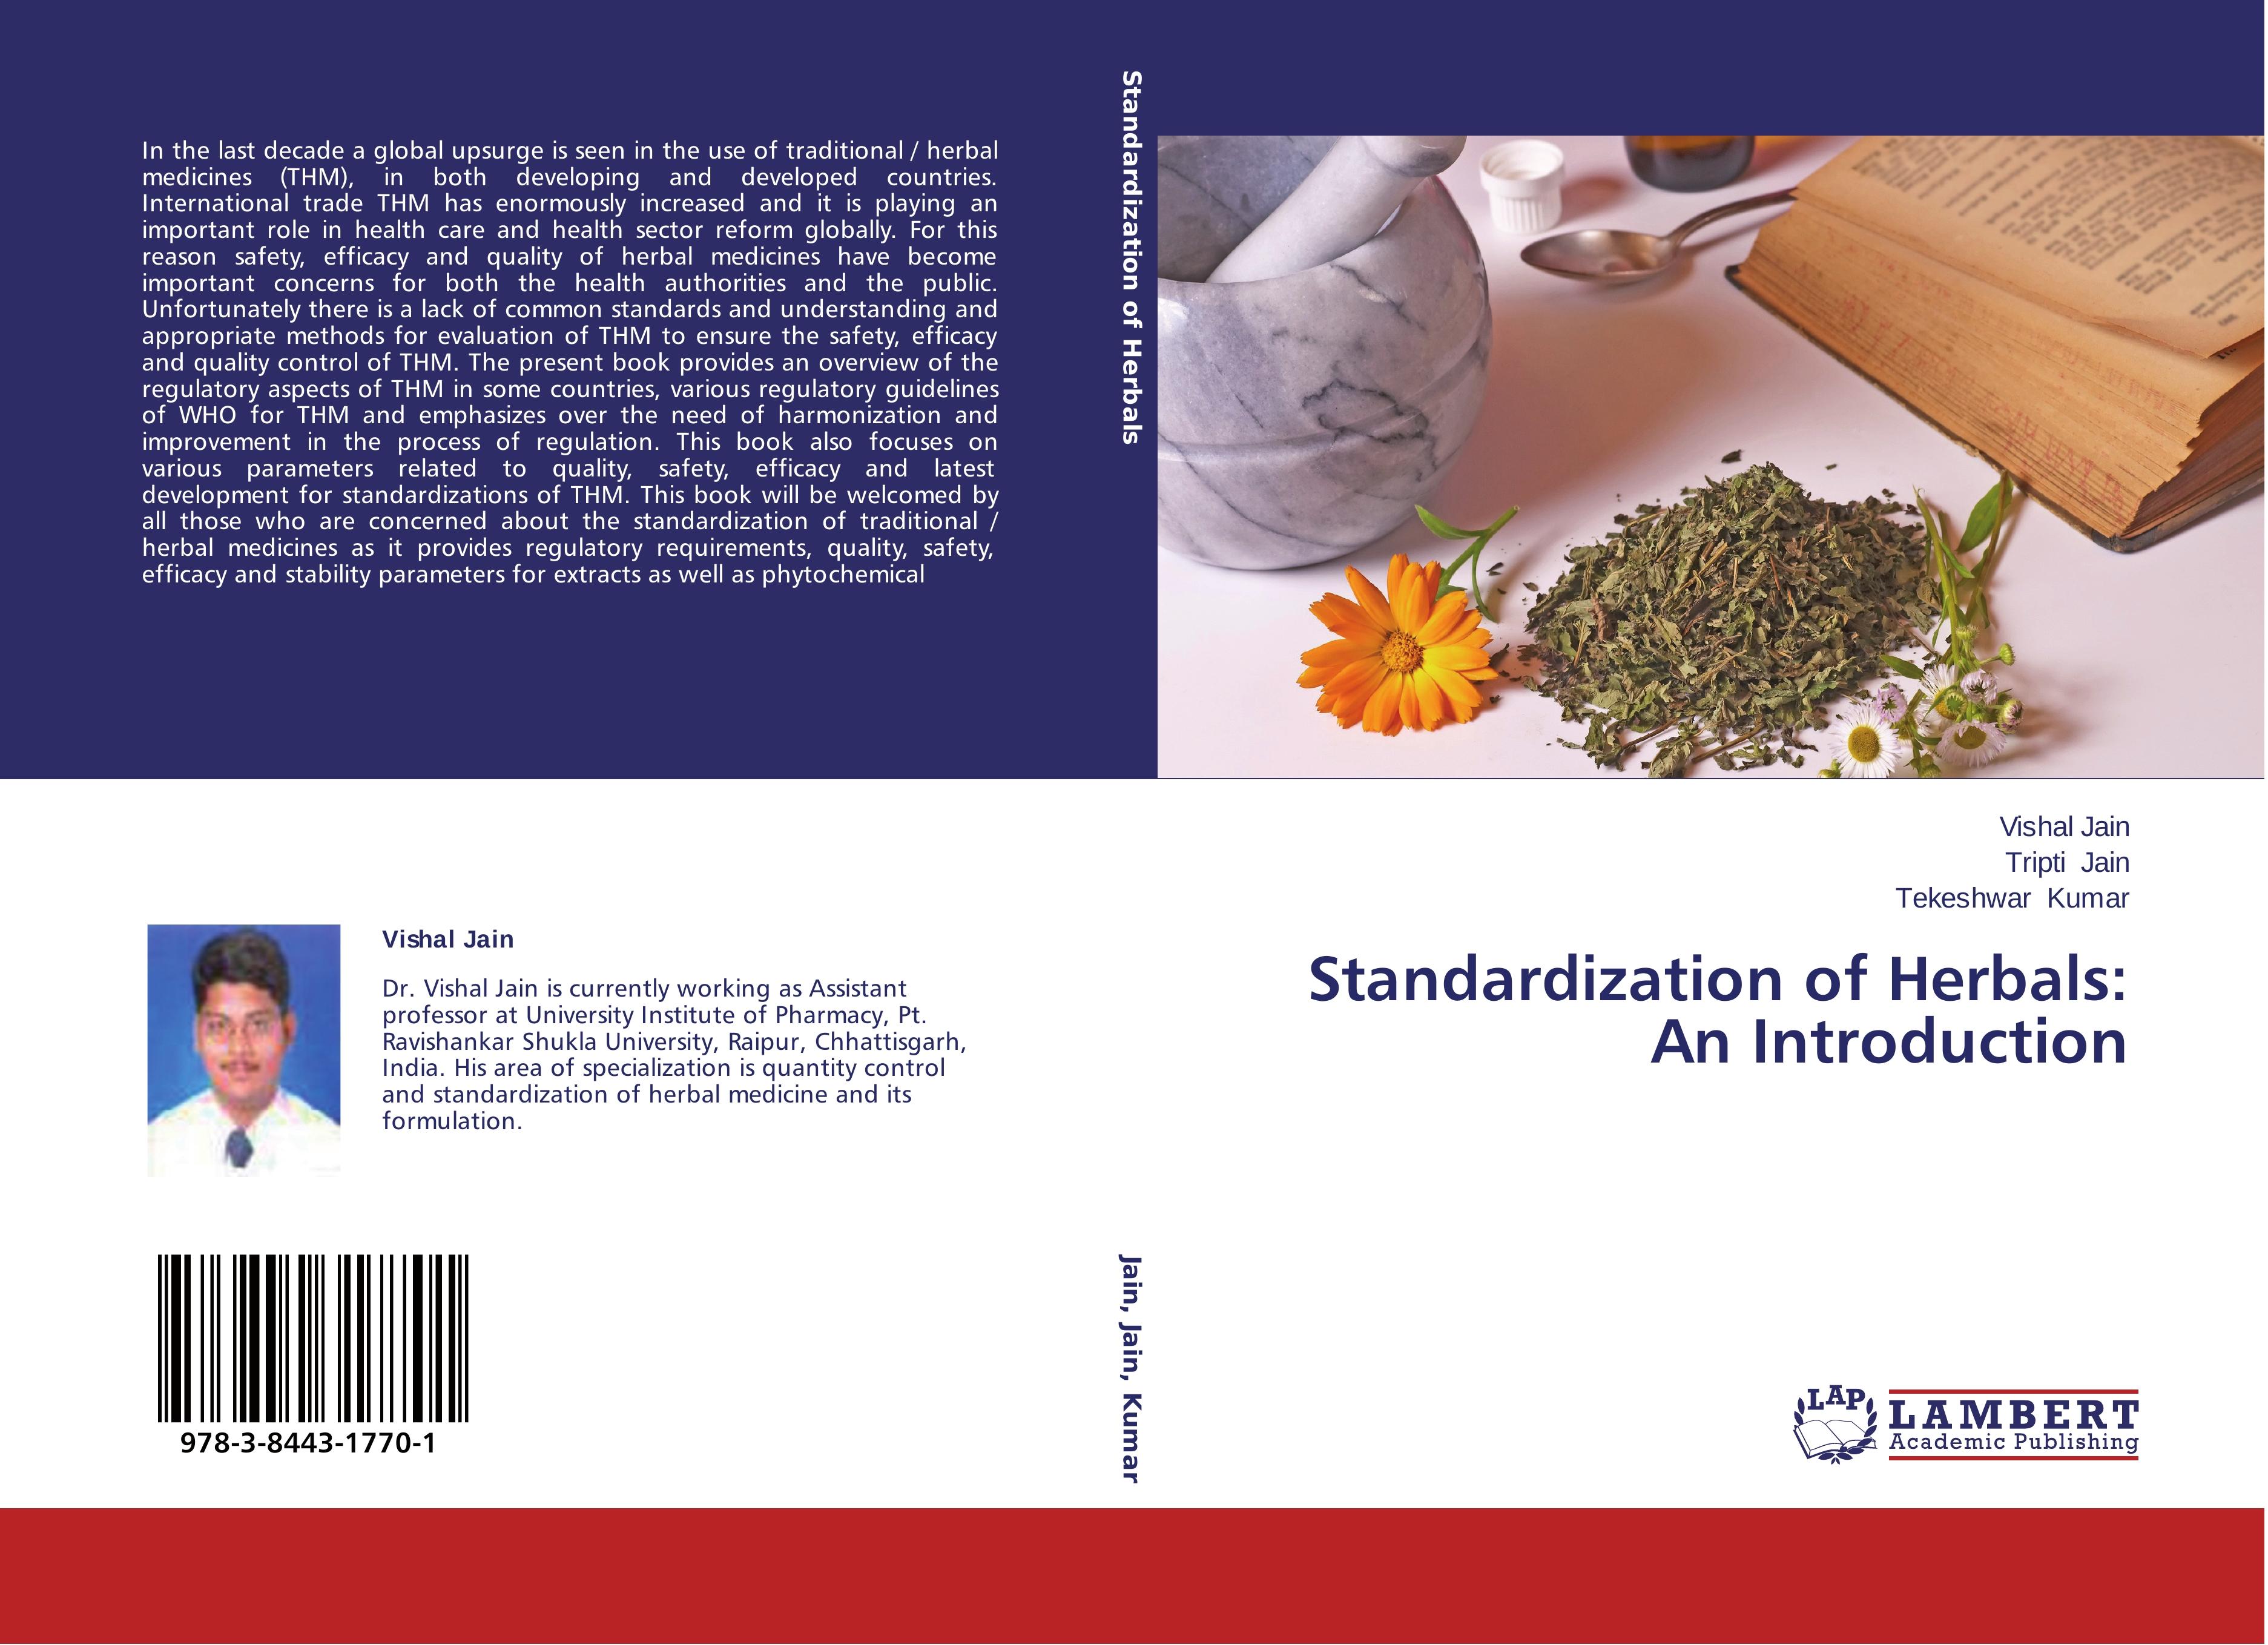 Standardization of Herbals: An Introduction - Vishal Jain Tripti Jain Tekeshwar Kumar